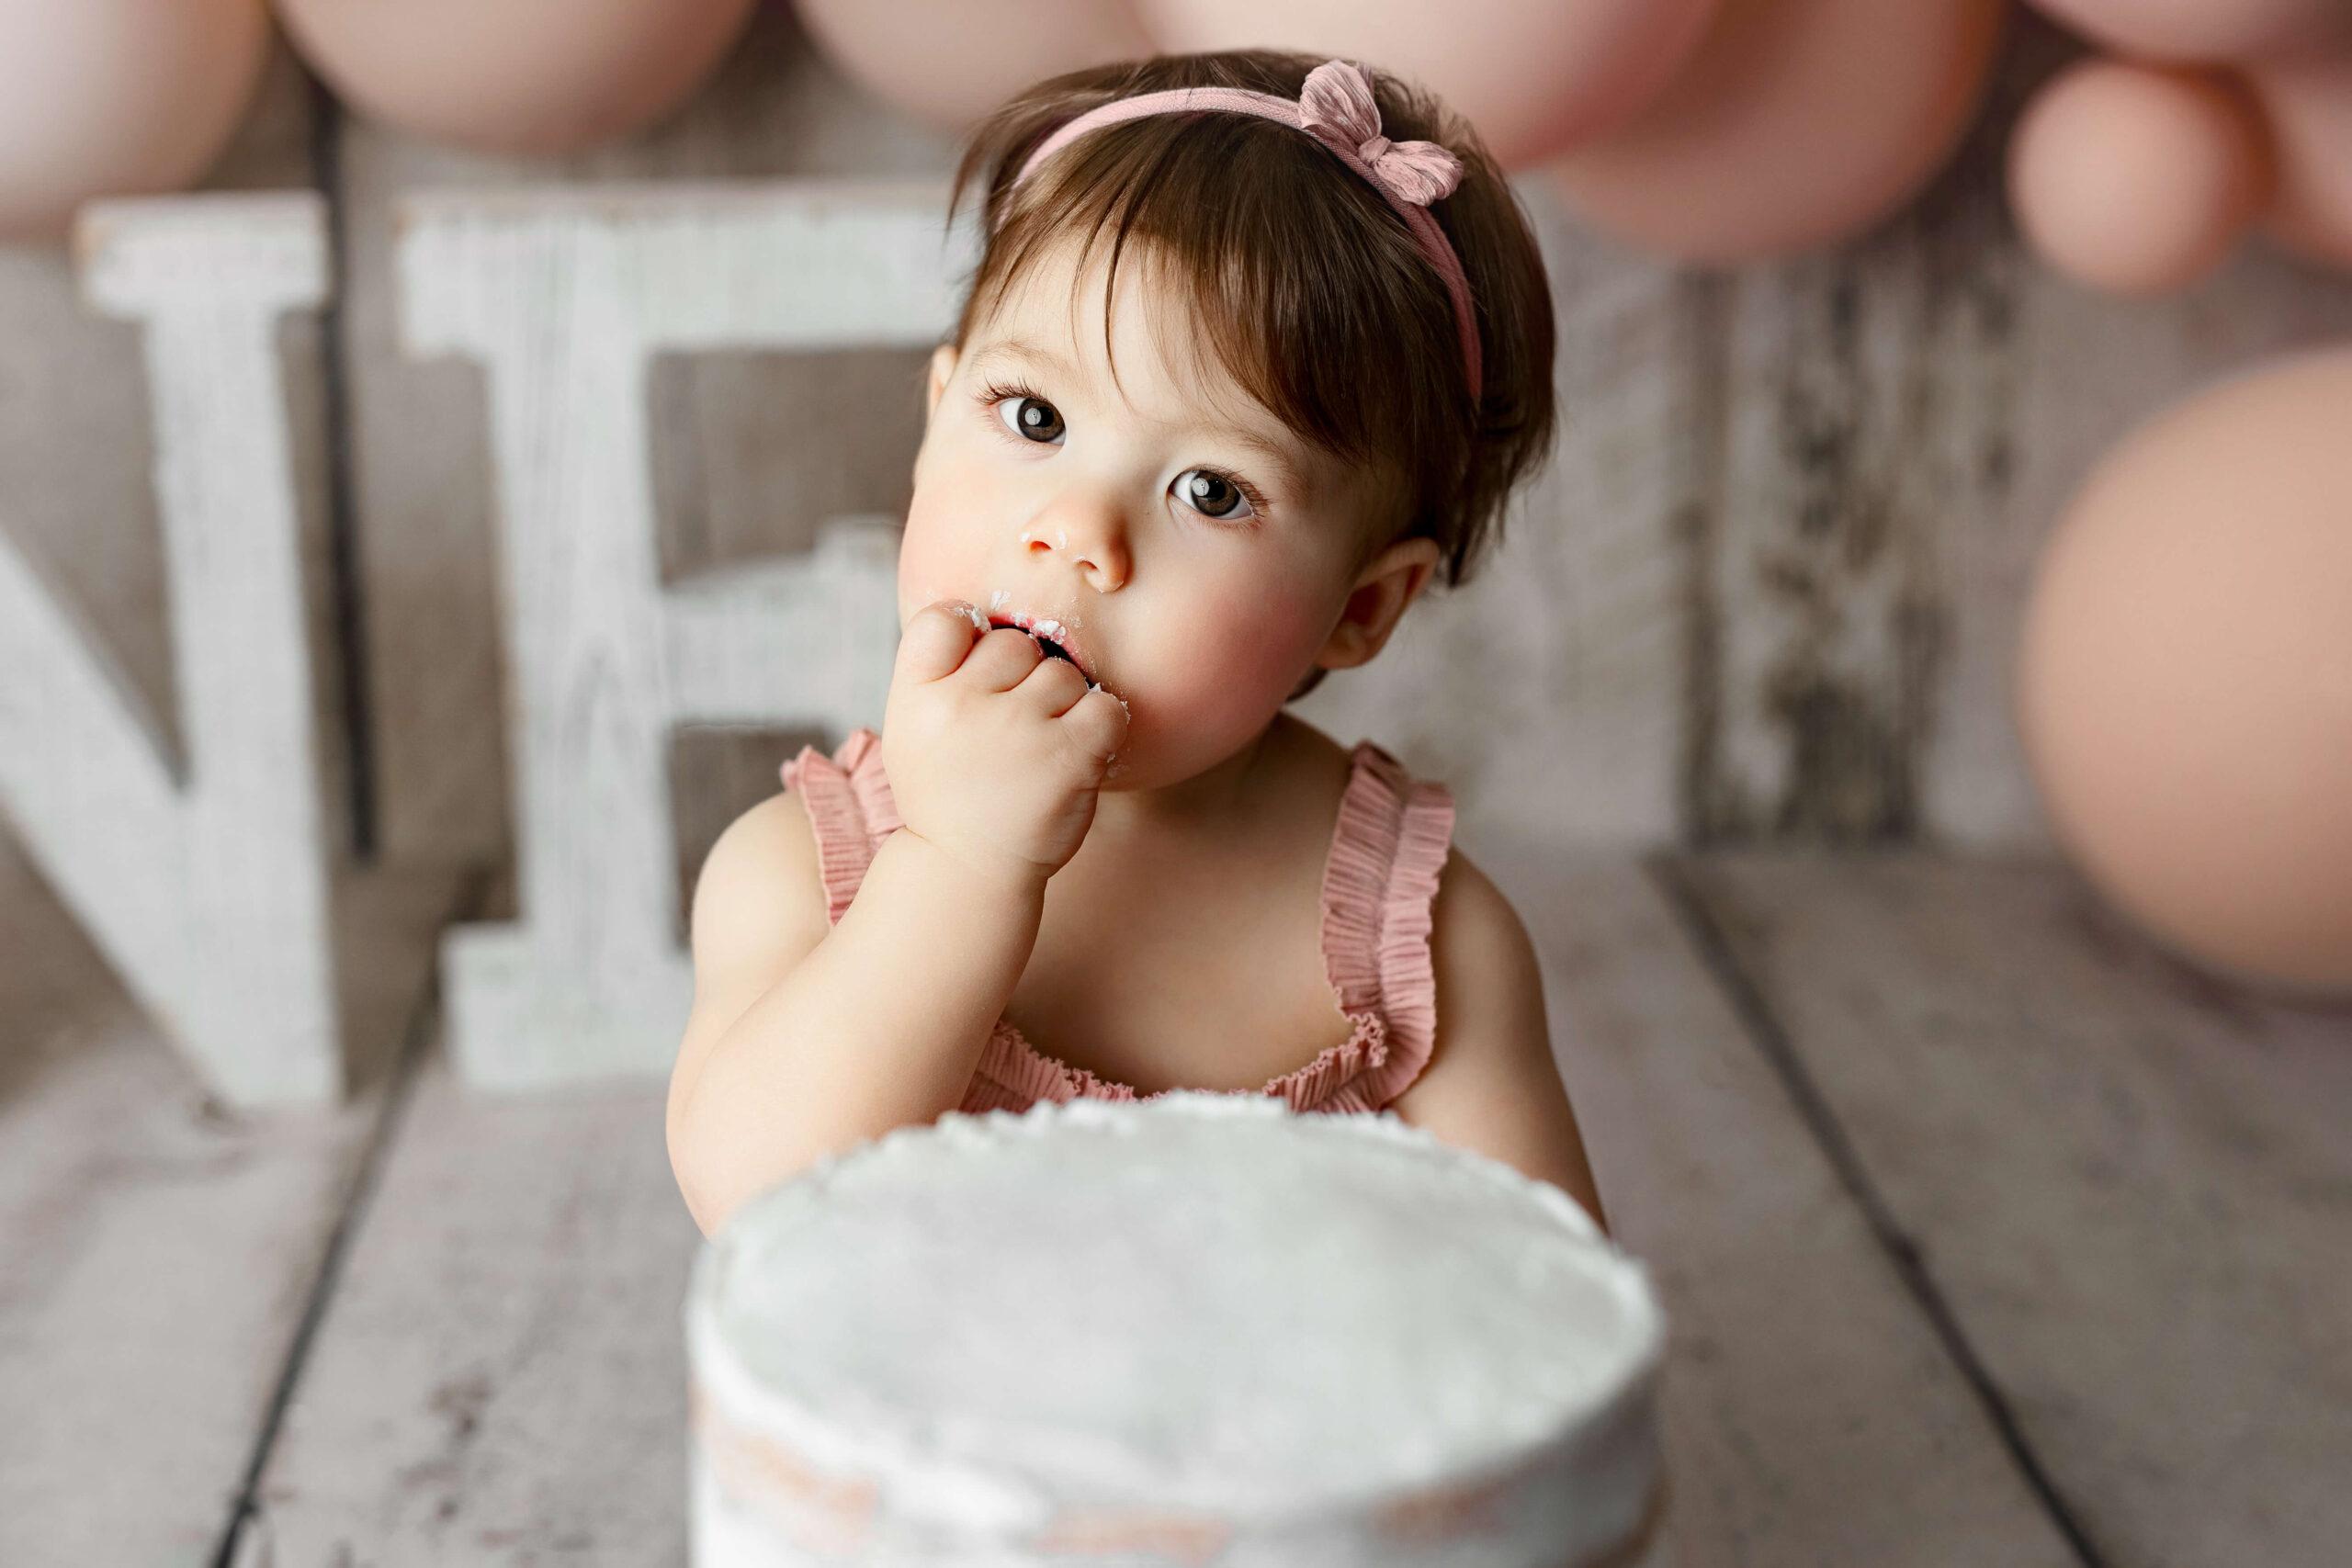 toddler eating cake at her cake smash phoogrqaphy session by a leesburg va toddler photogapher